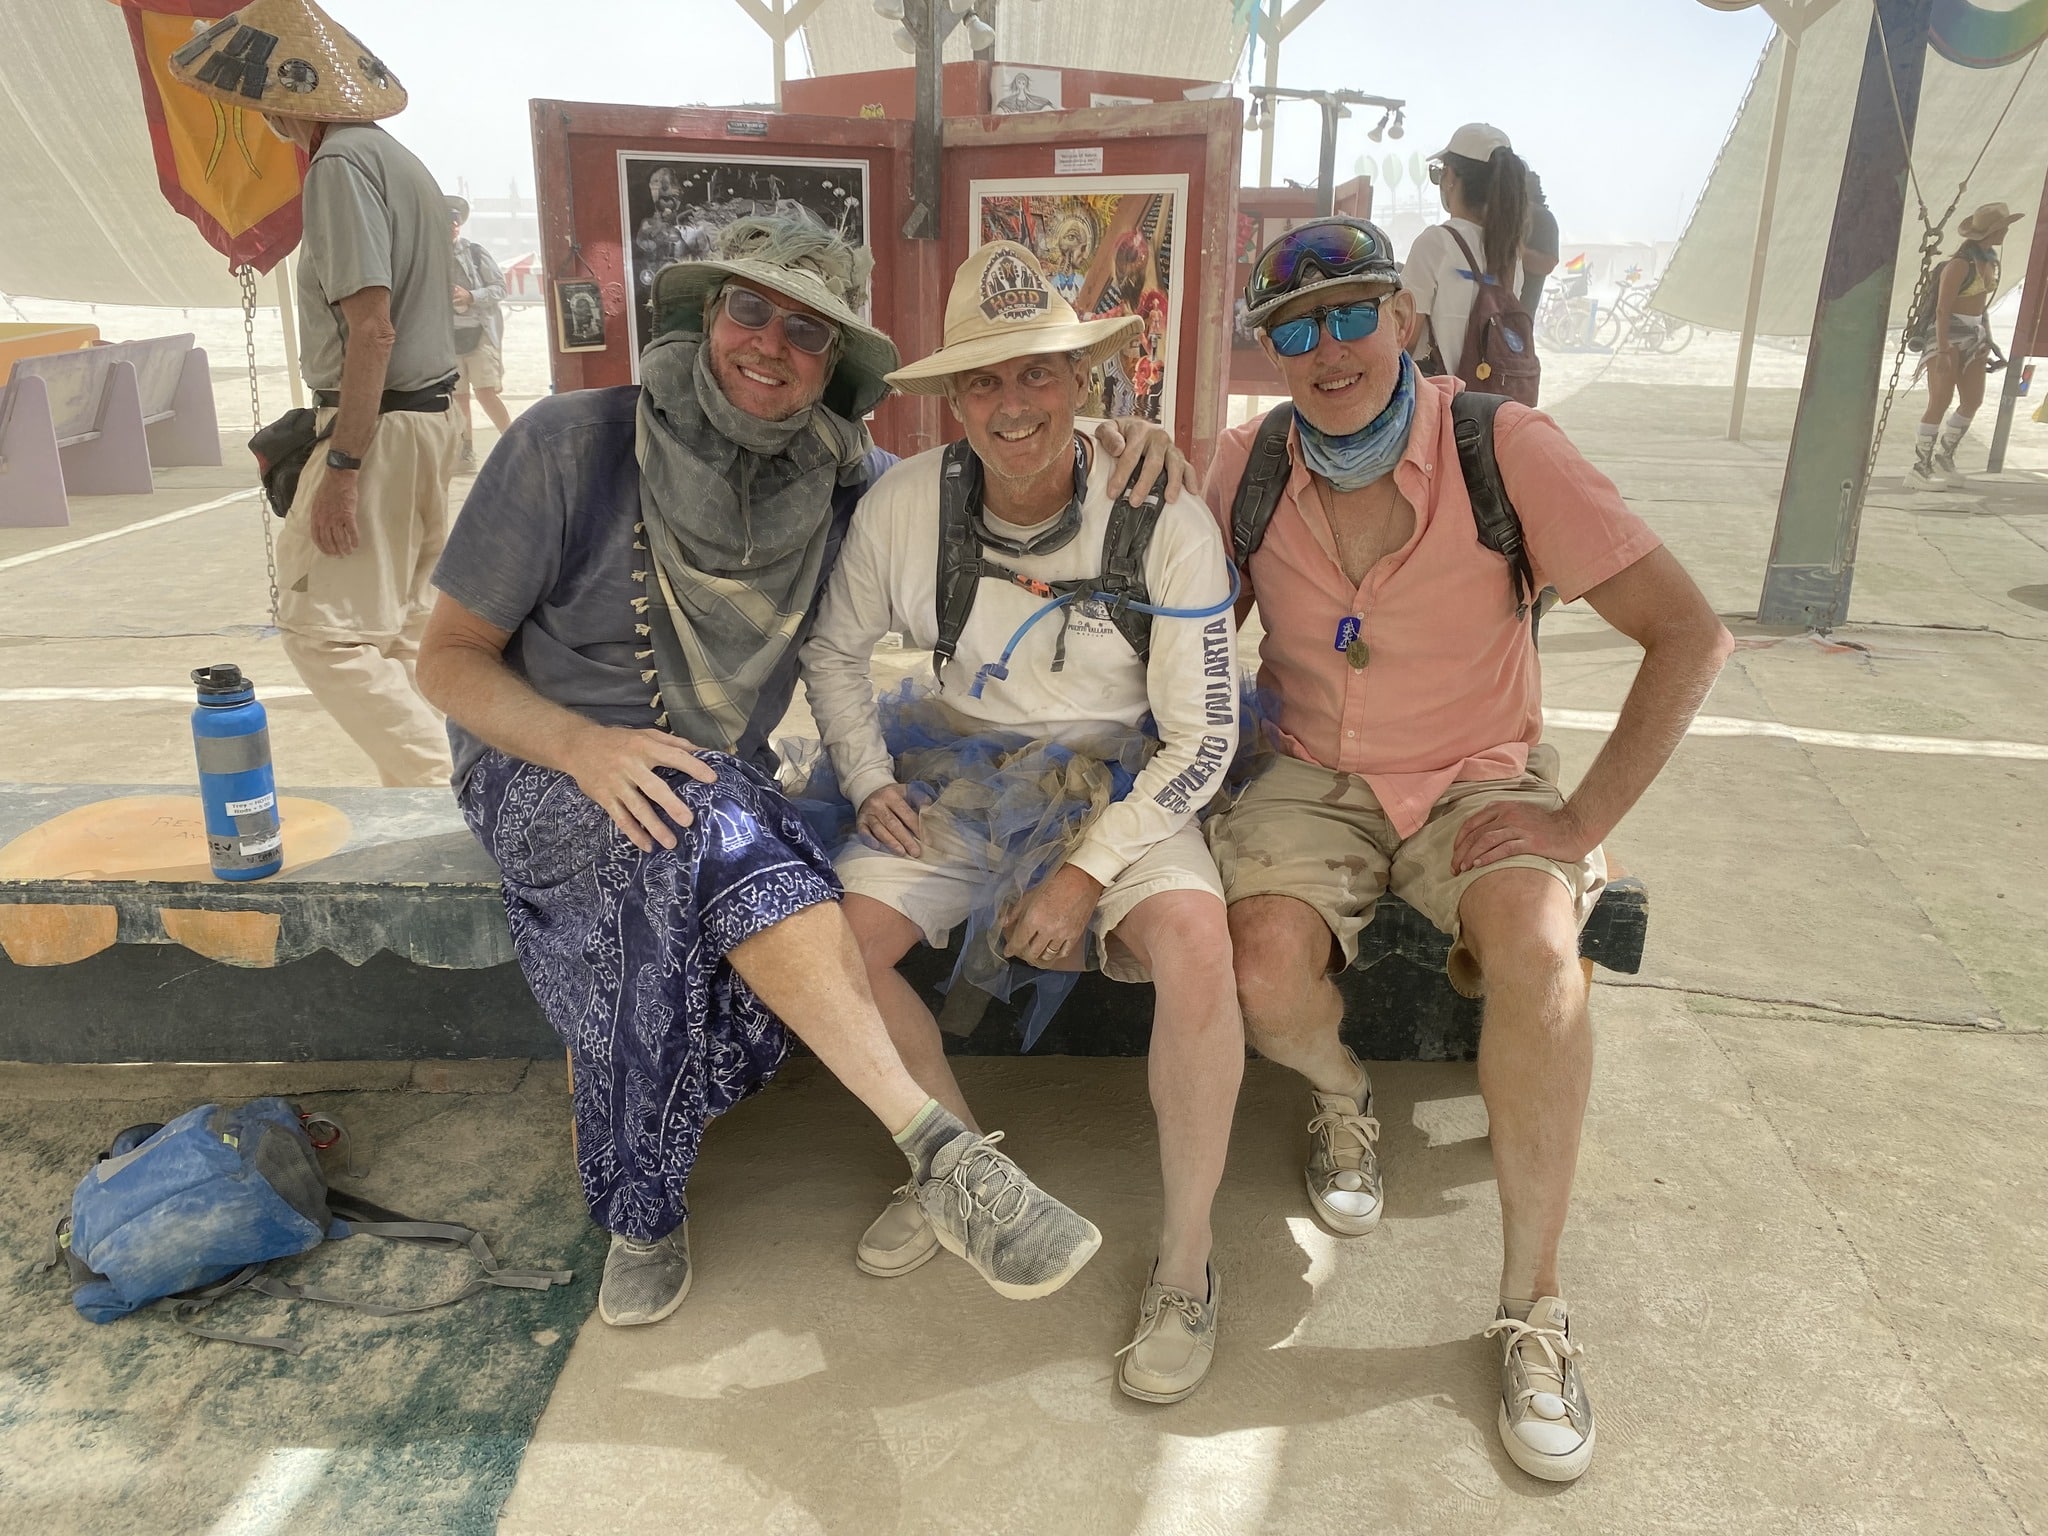 Jim at Burning Man